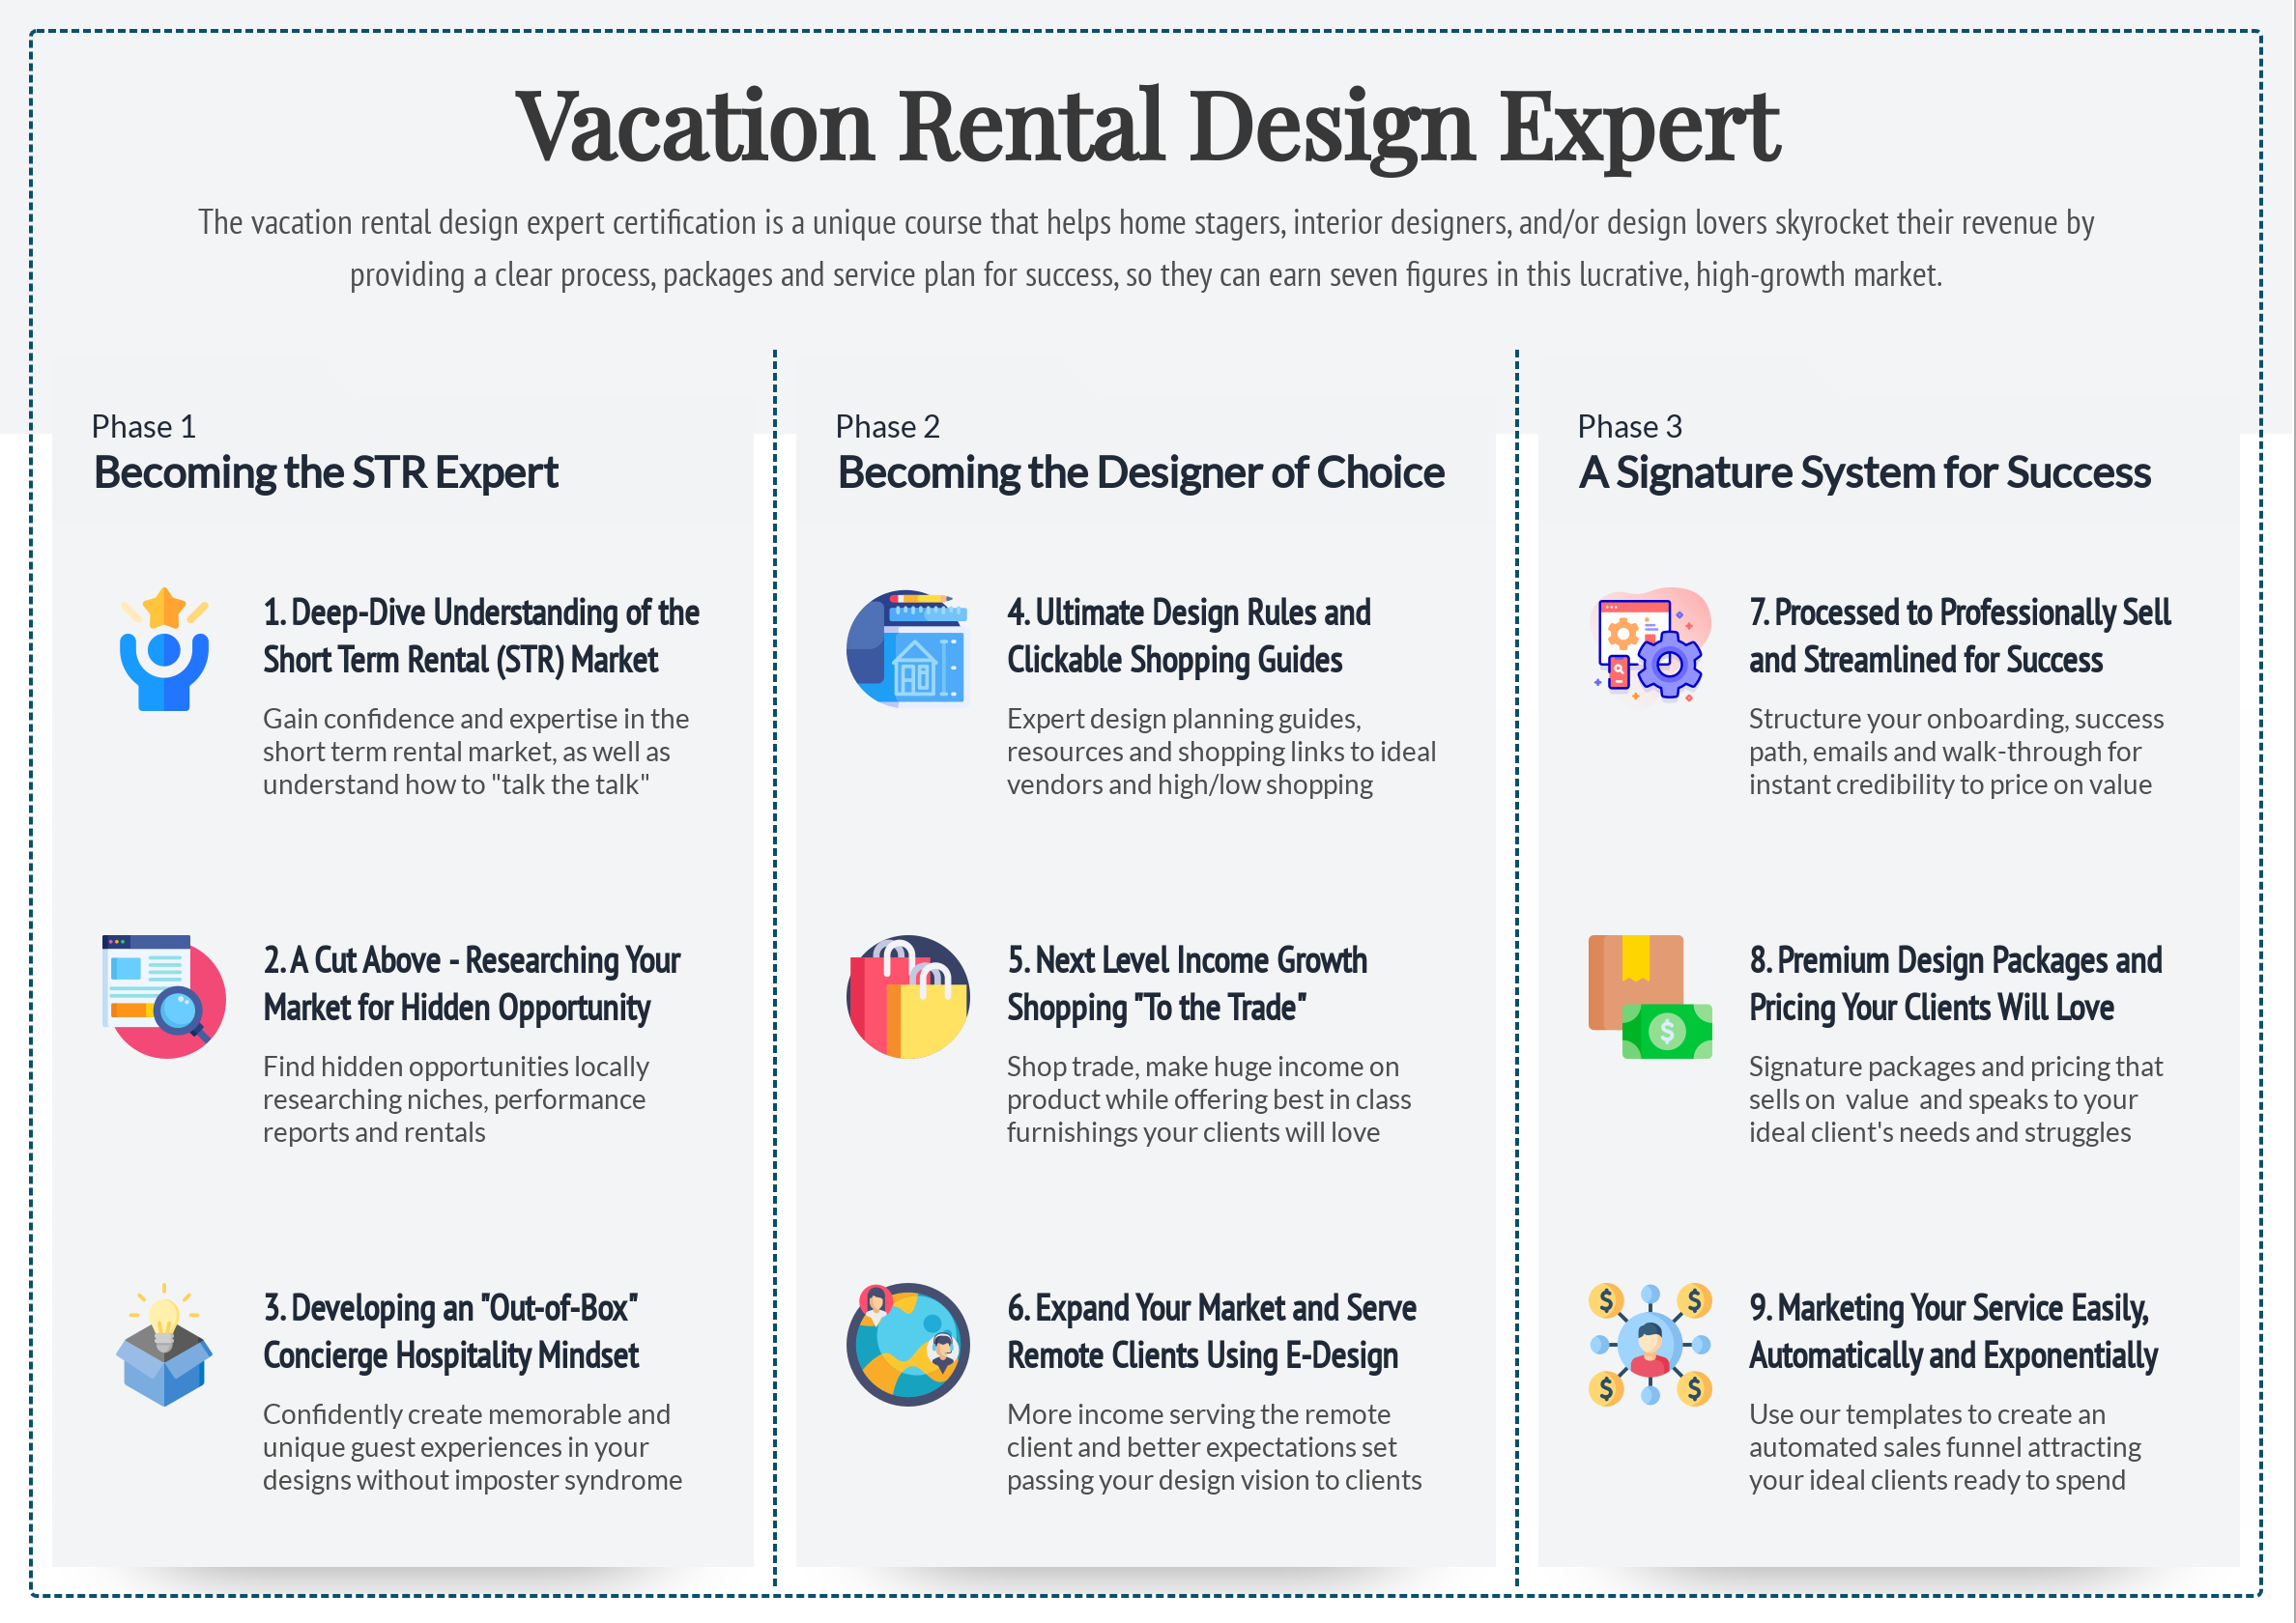 Vacation Rental Design Expert Course Outline